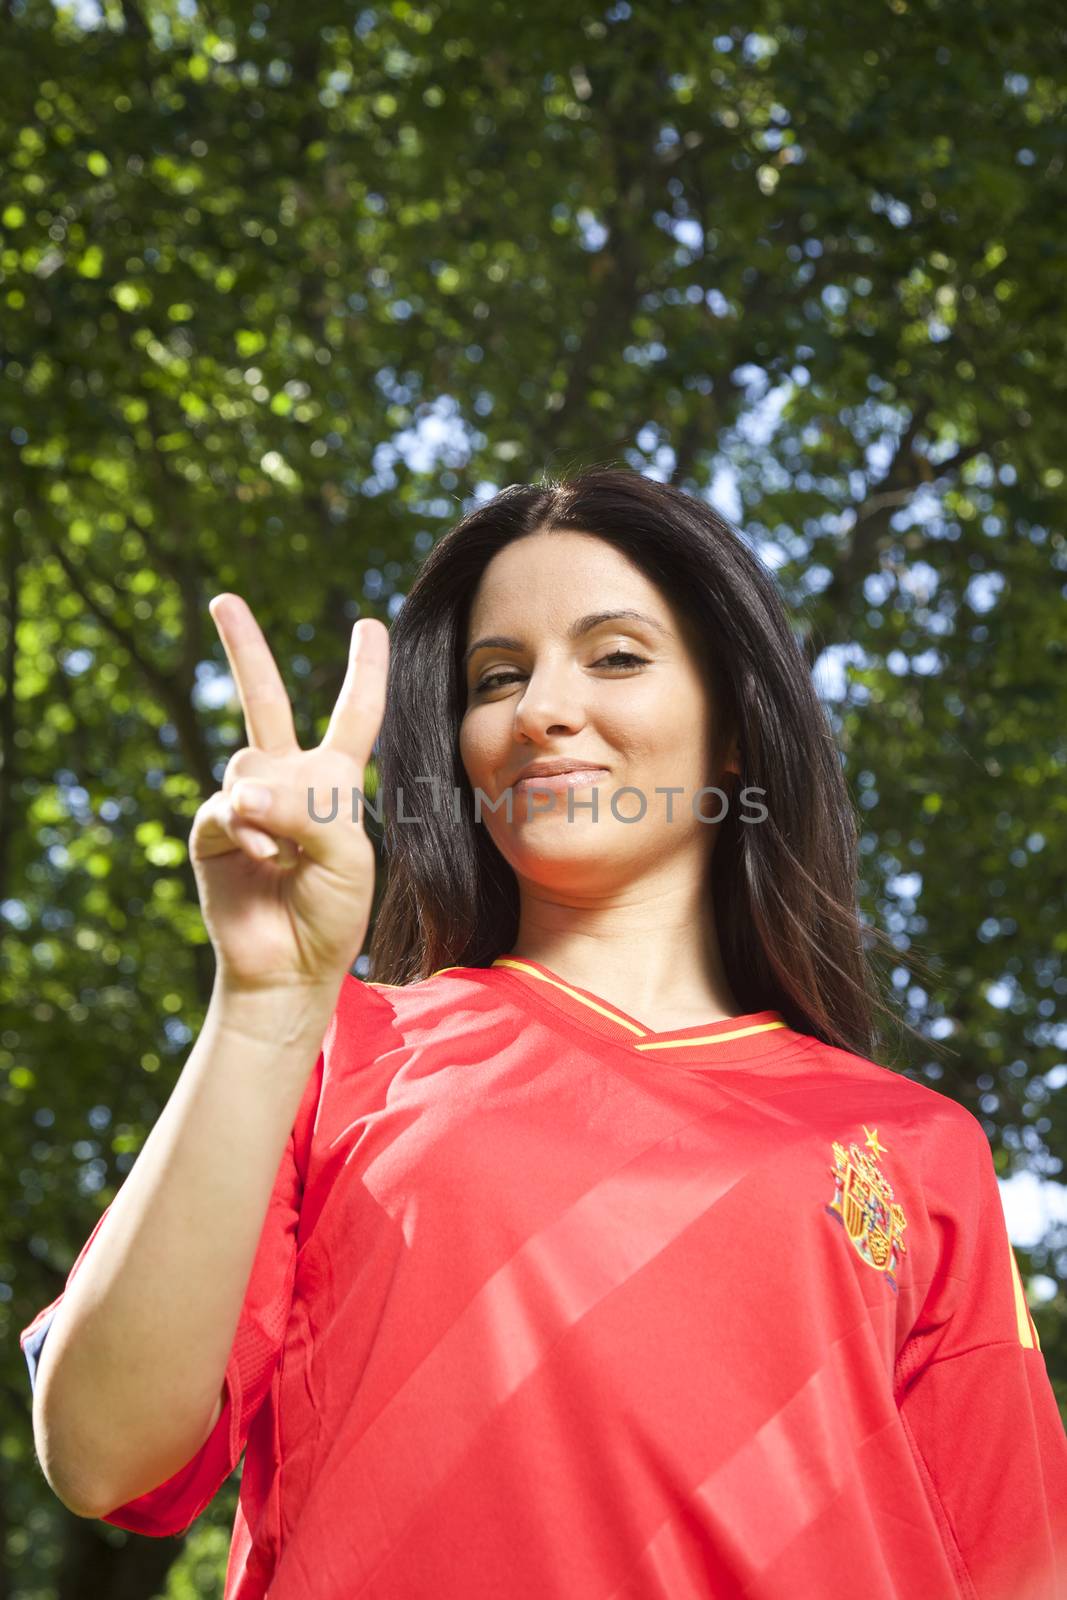 woman with spanish football team shirt cheering happy
